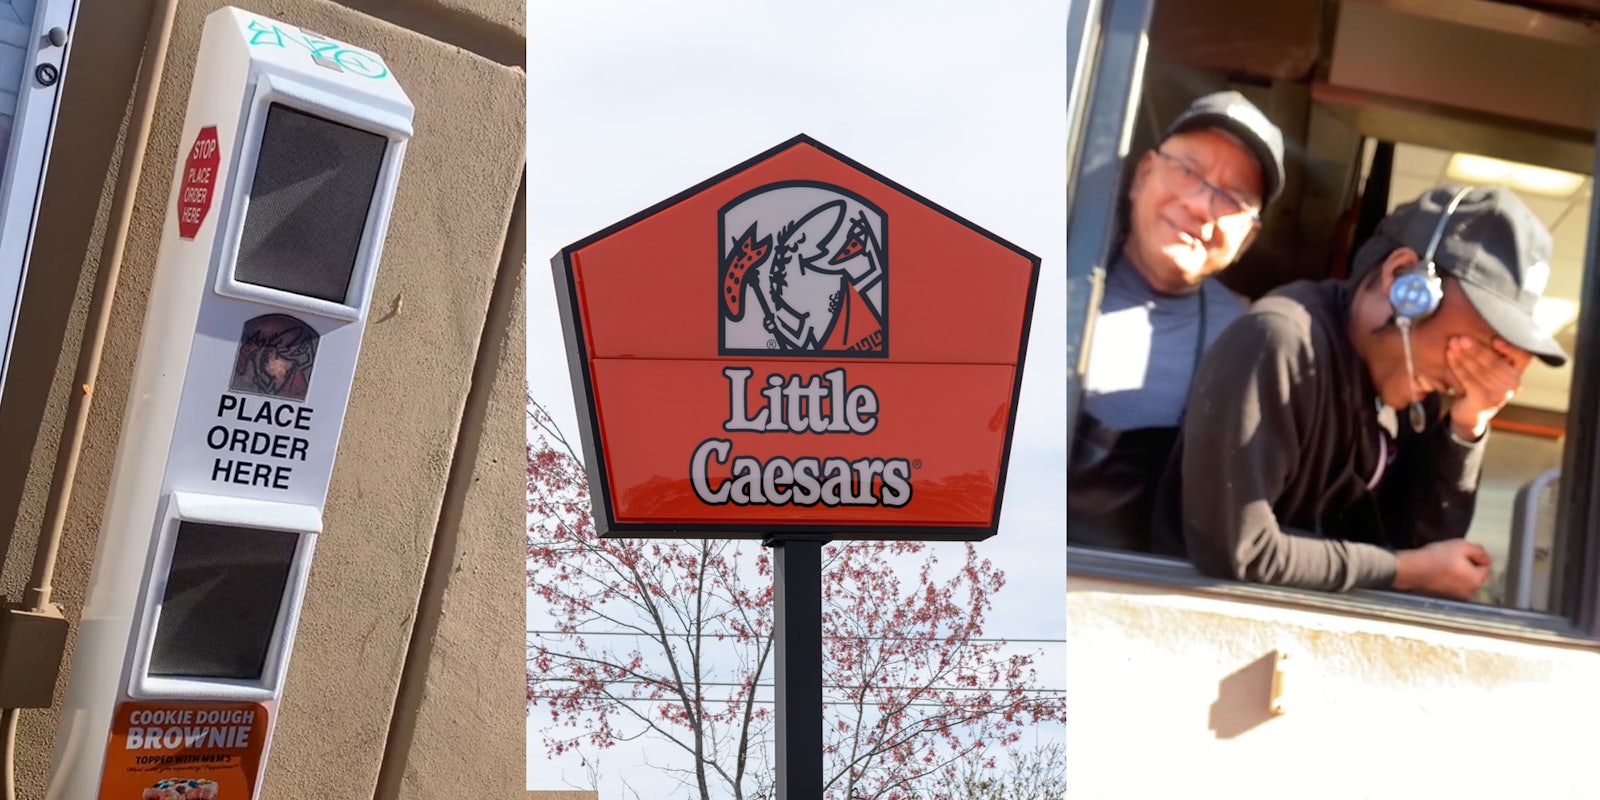 Little Caesar's drive thru ordering speaker (l) Little Caesars sign (c) Little Caesar's employees at drive thru window reacting (r)